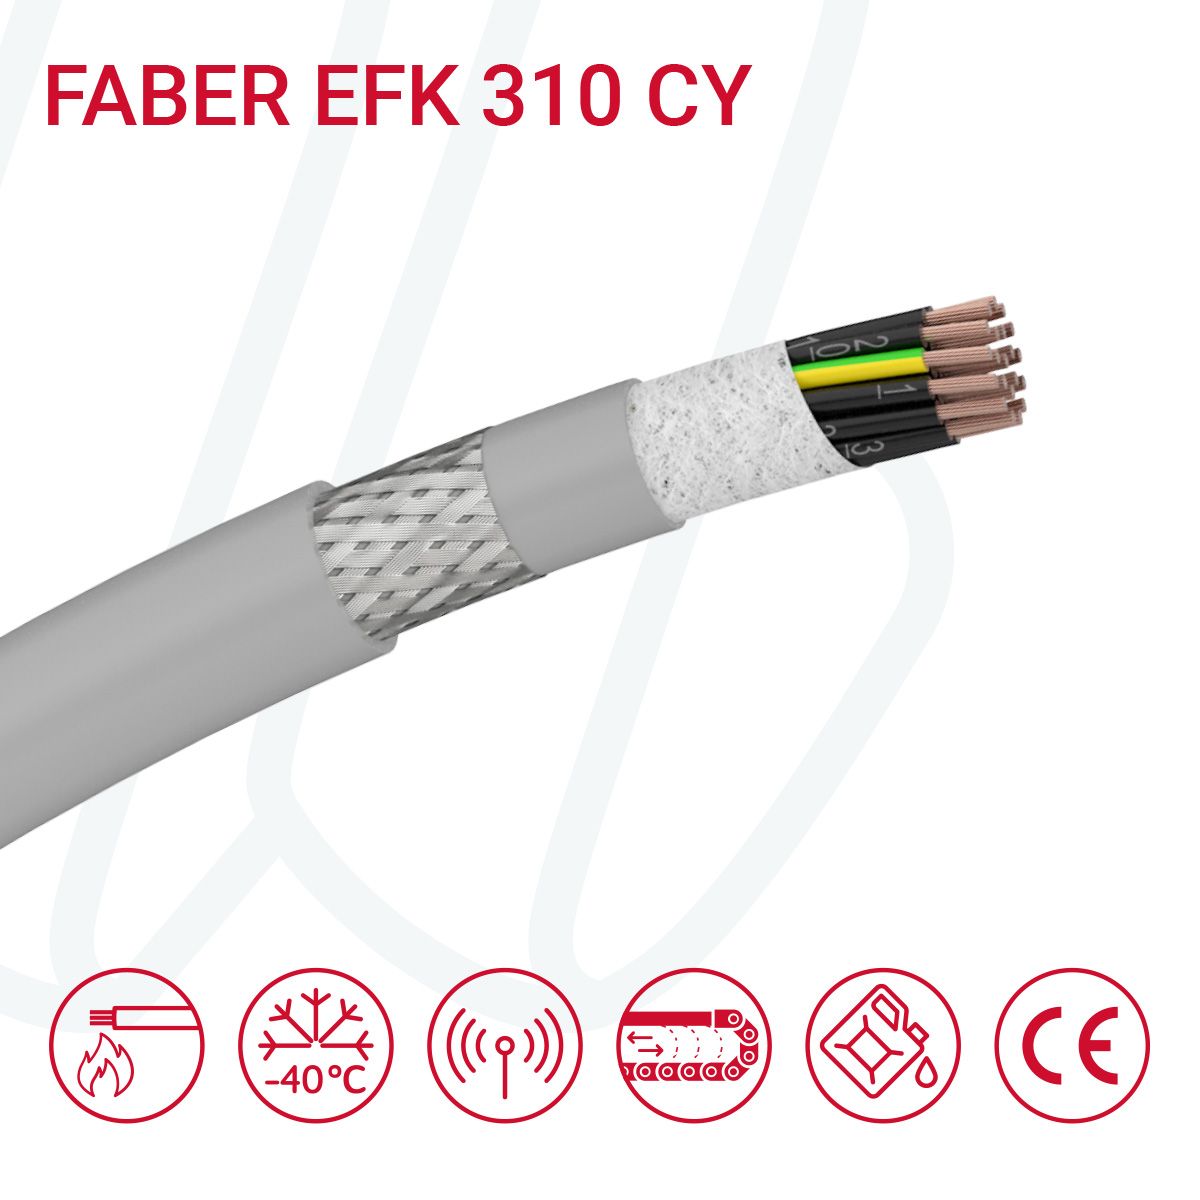 Кабель FABER EFK 310 CY 02X1.5 cUL сірий, 02, 1.5